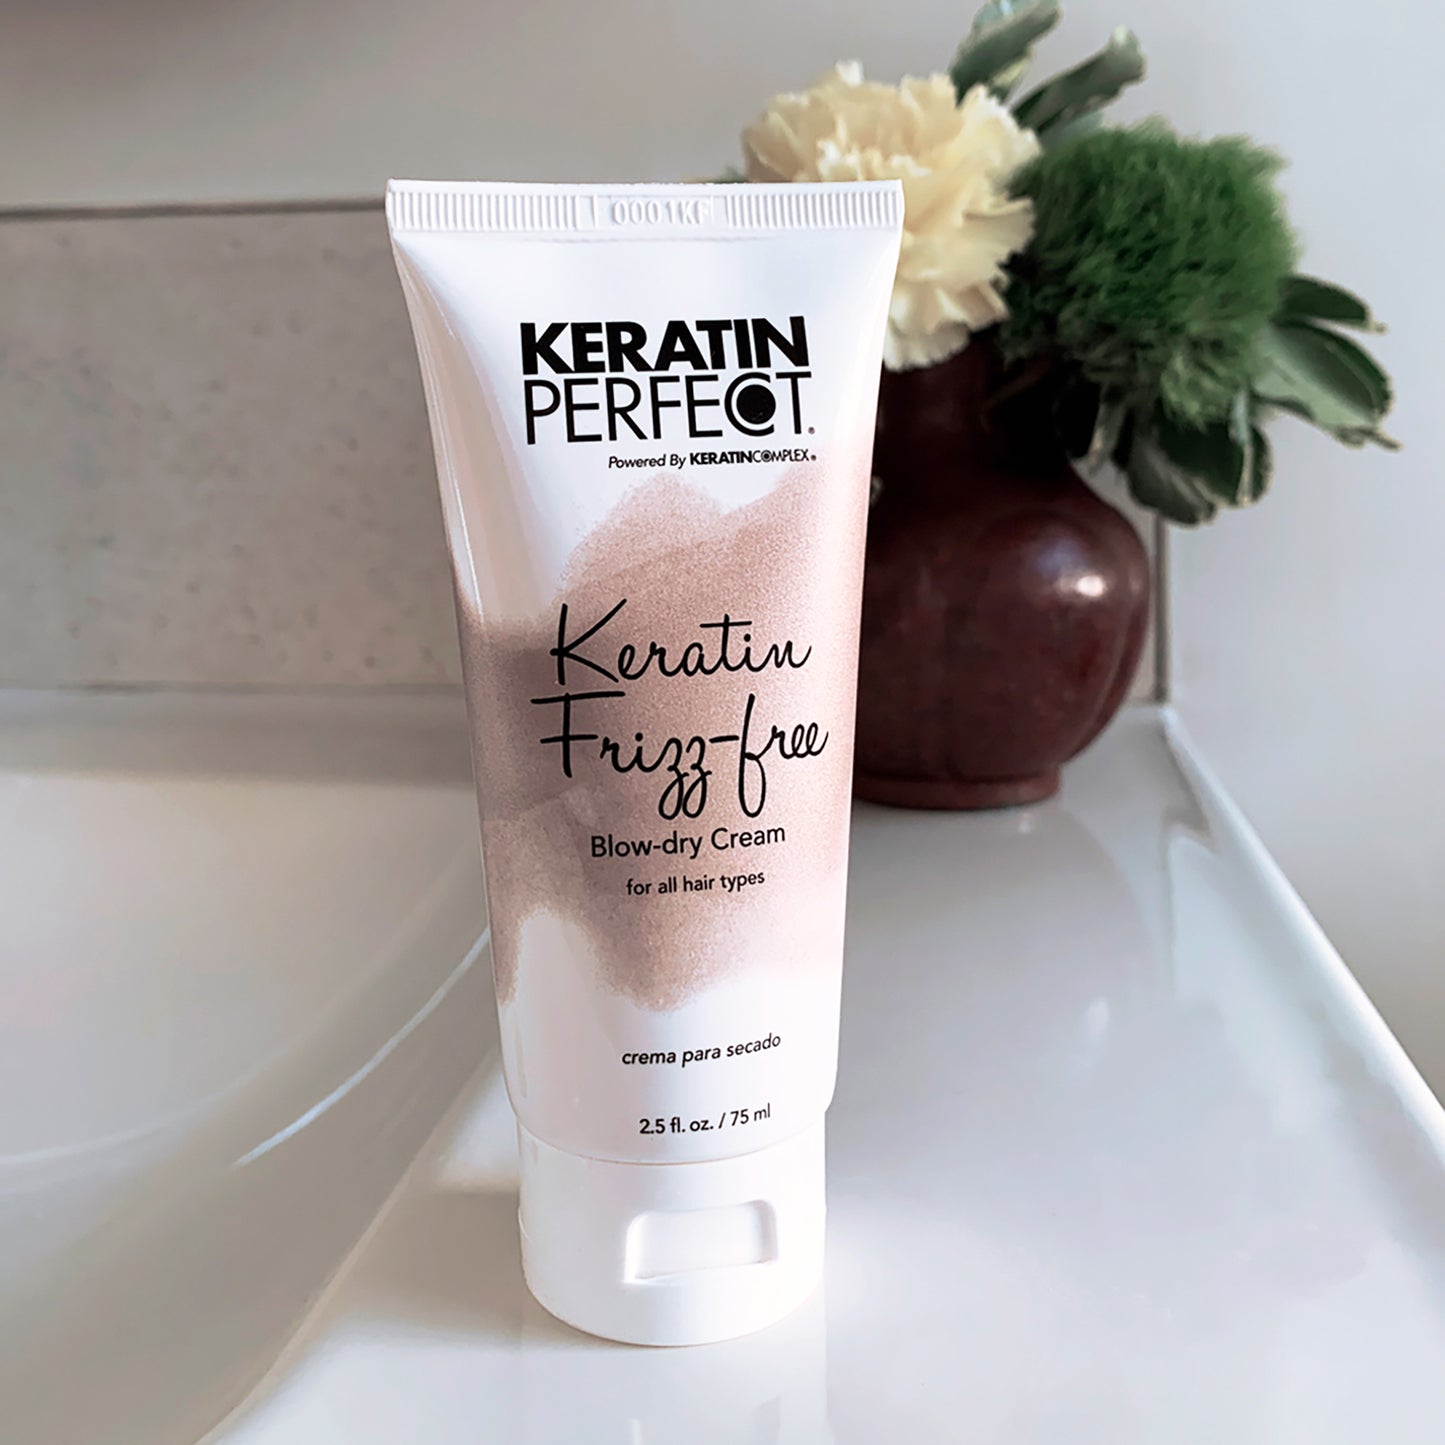 Keratin Frizz-free Blow-dry Cream